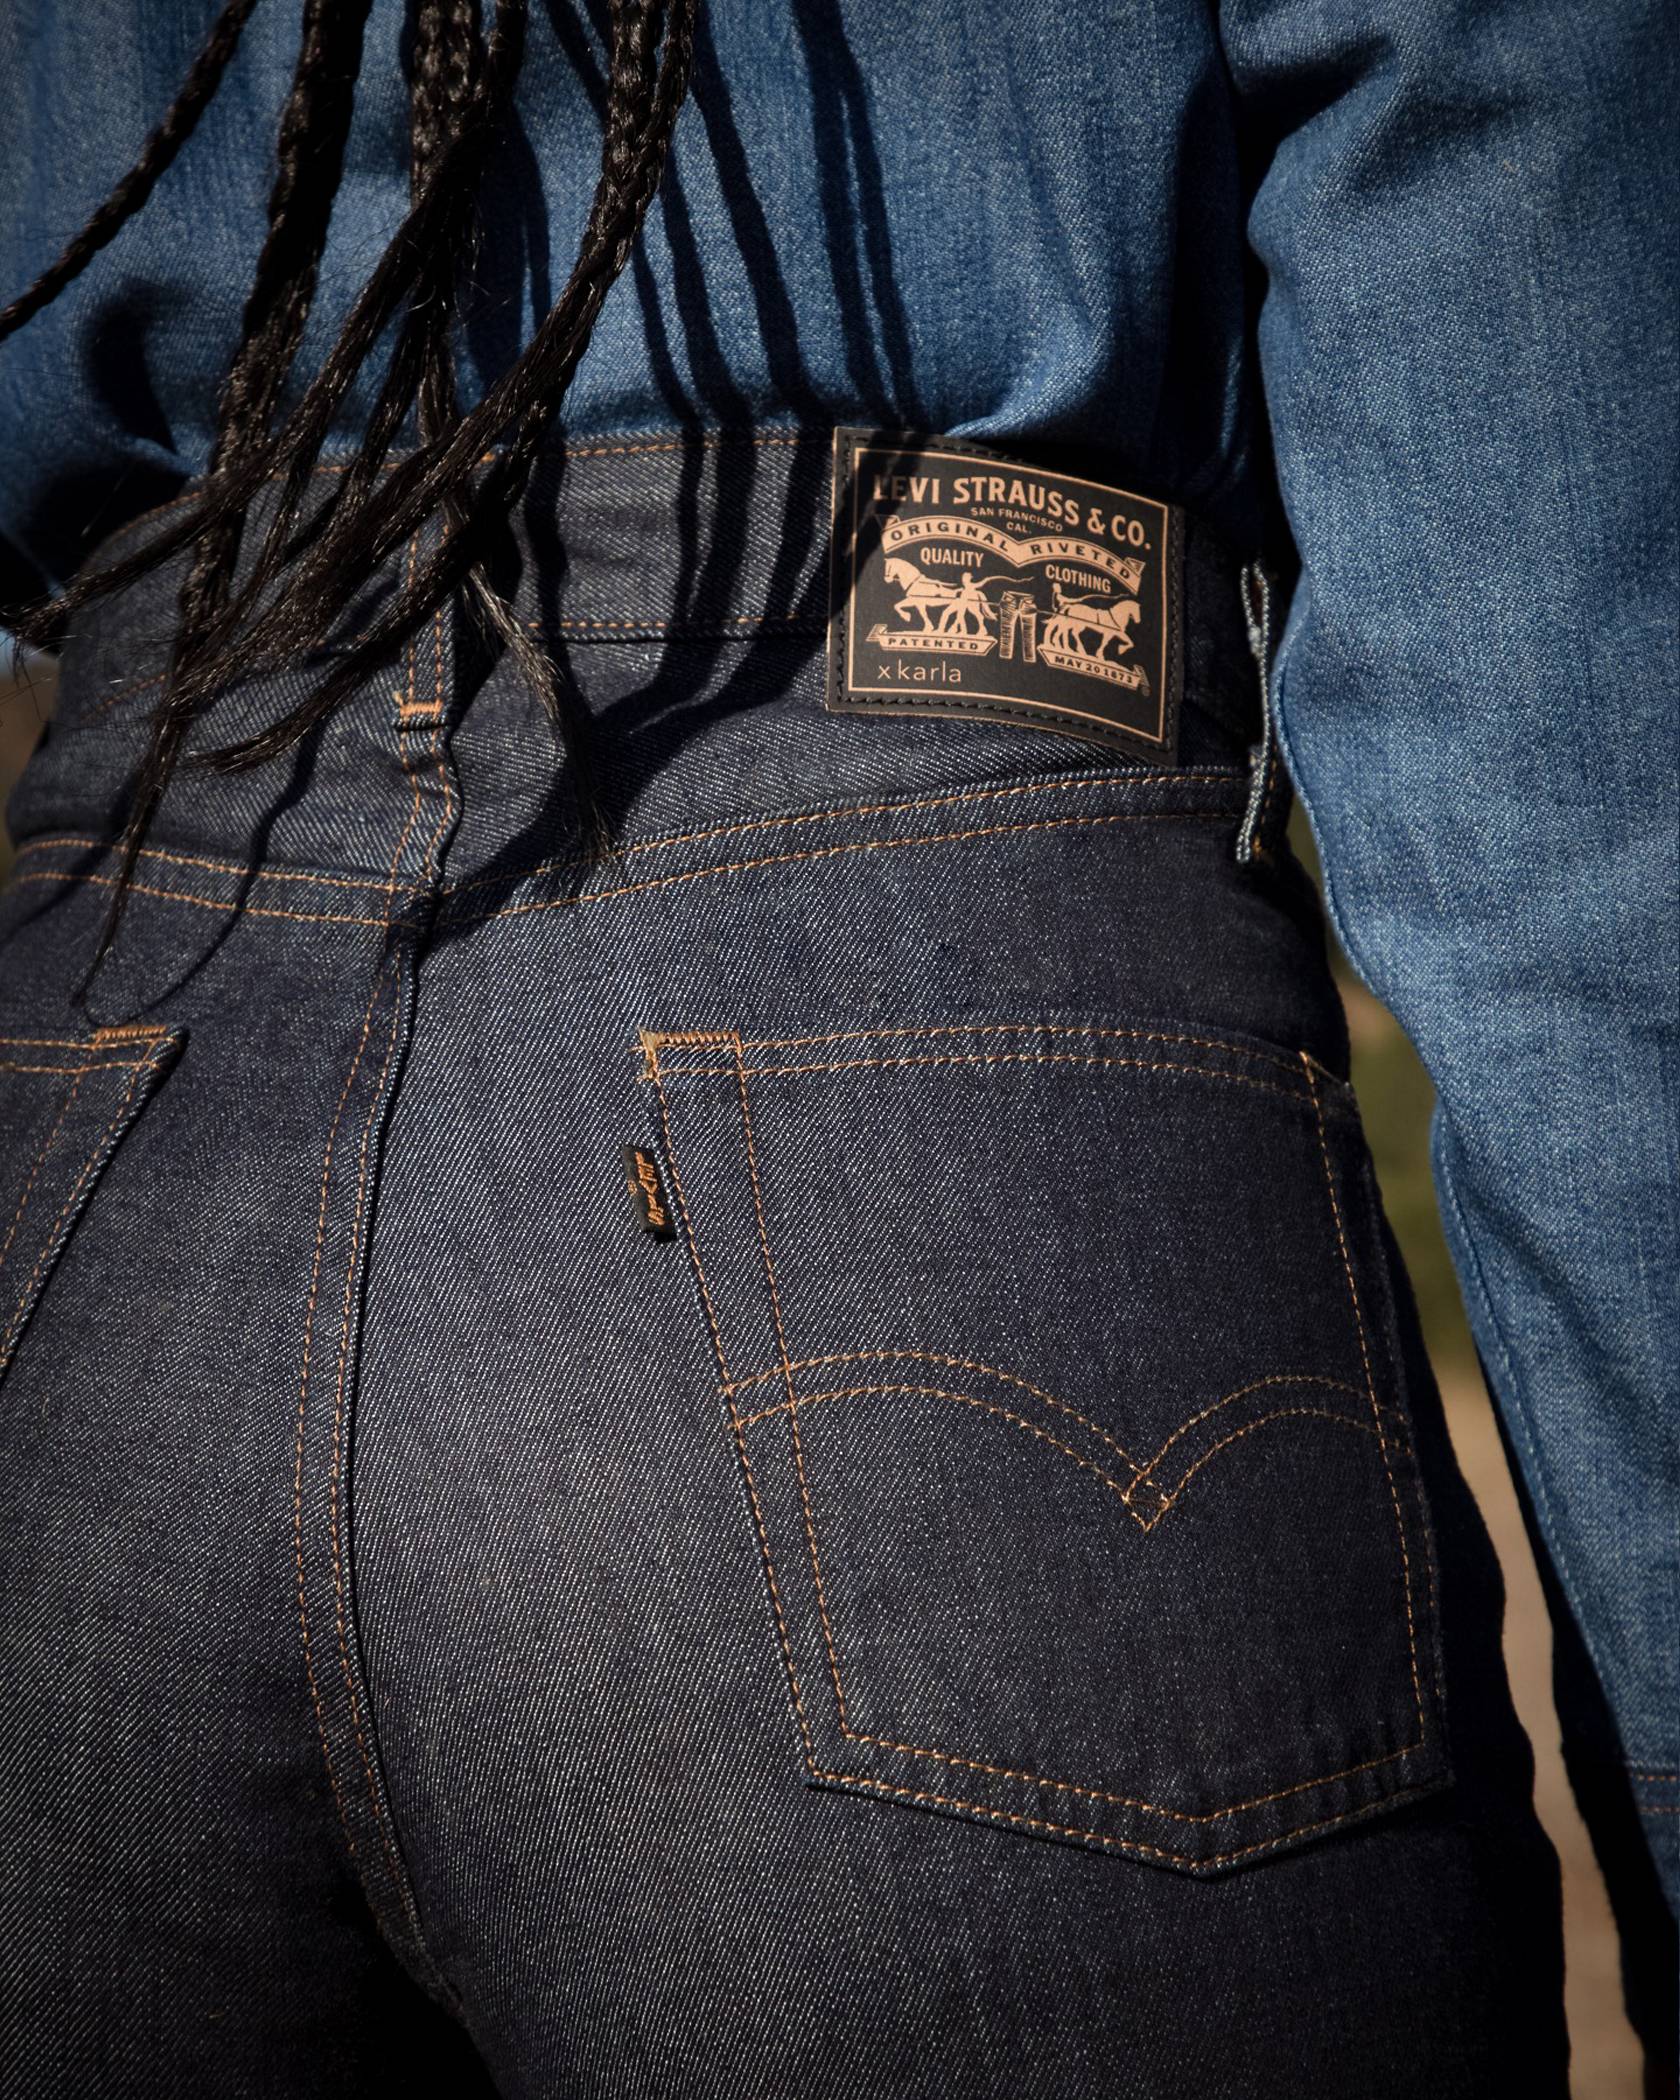 Close up butt shot of xKarla wearing dark denim jeans.